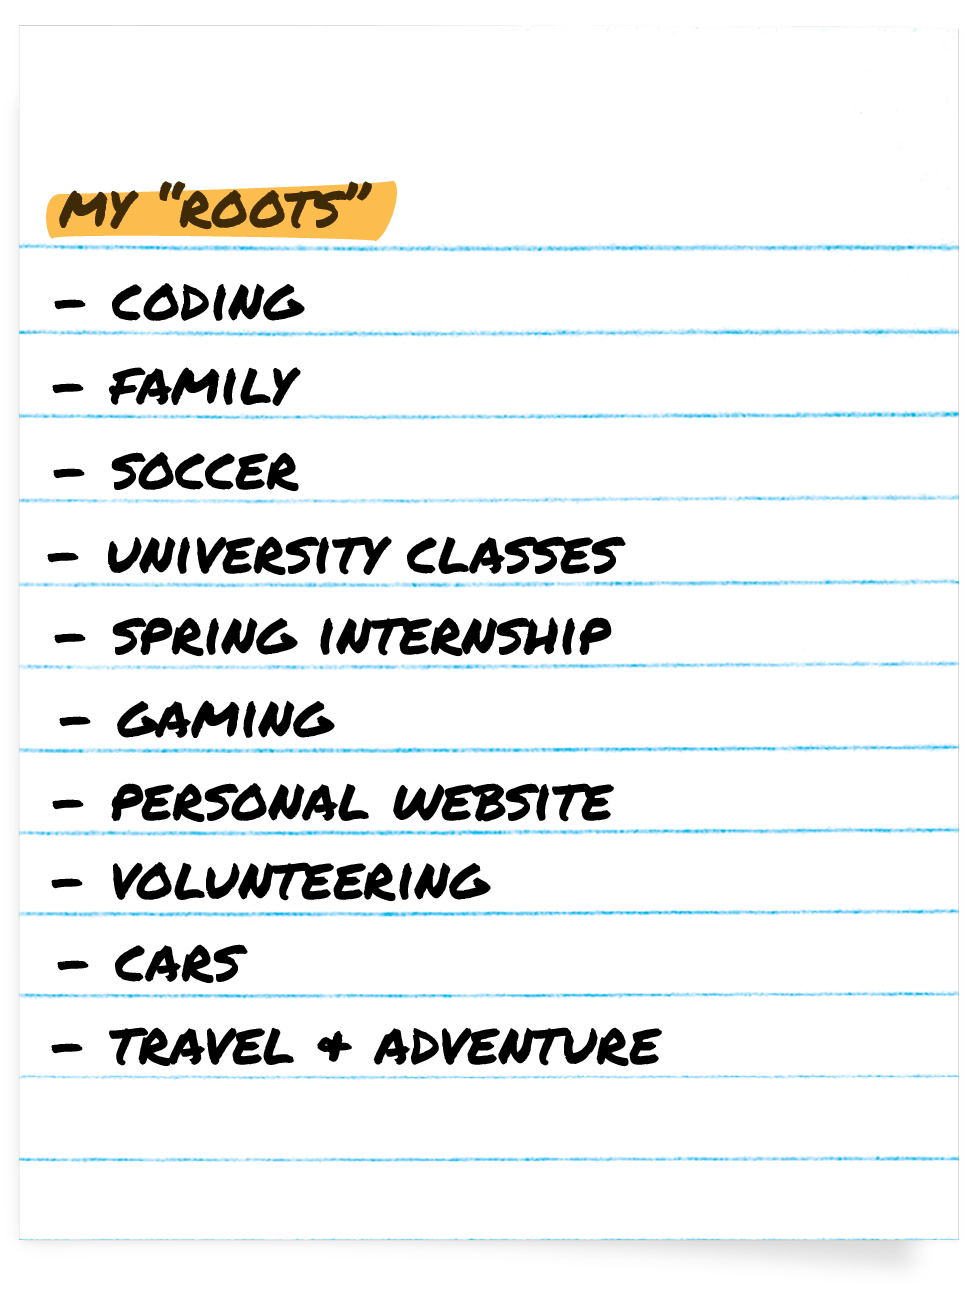 Brainstorming roots